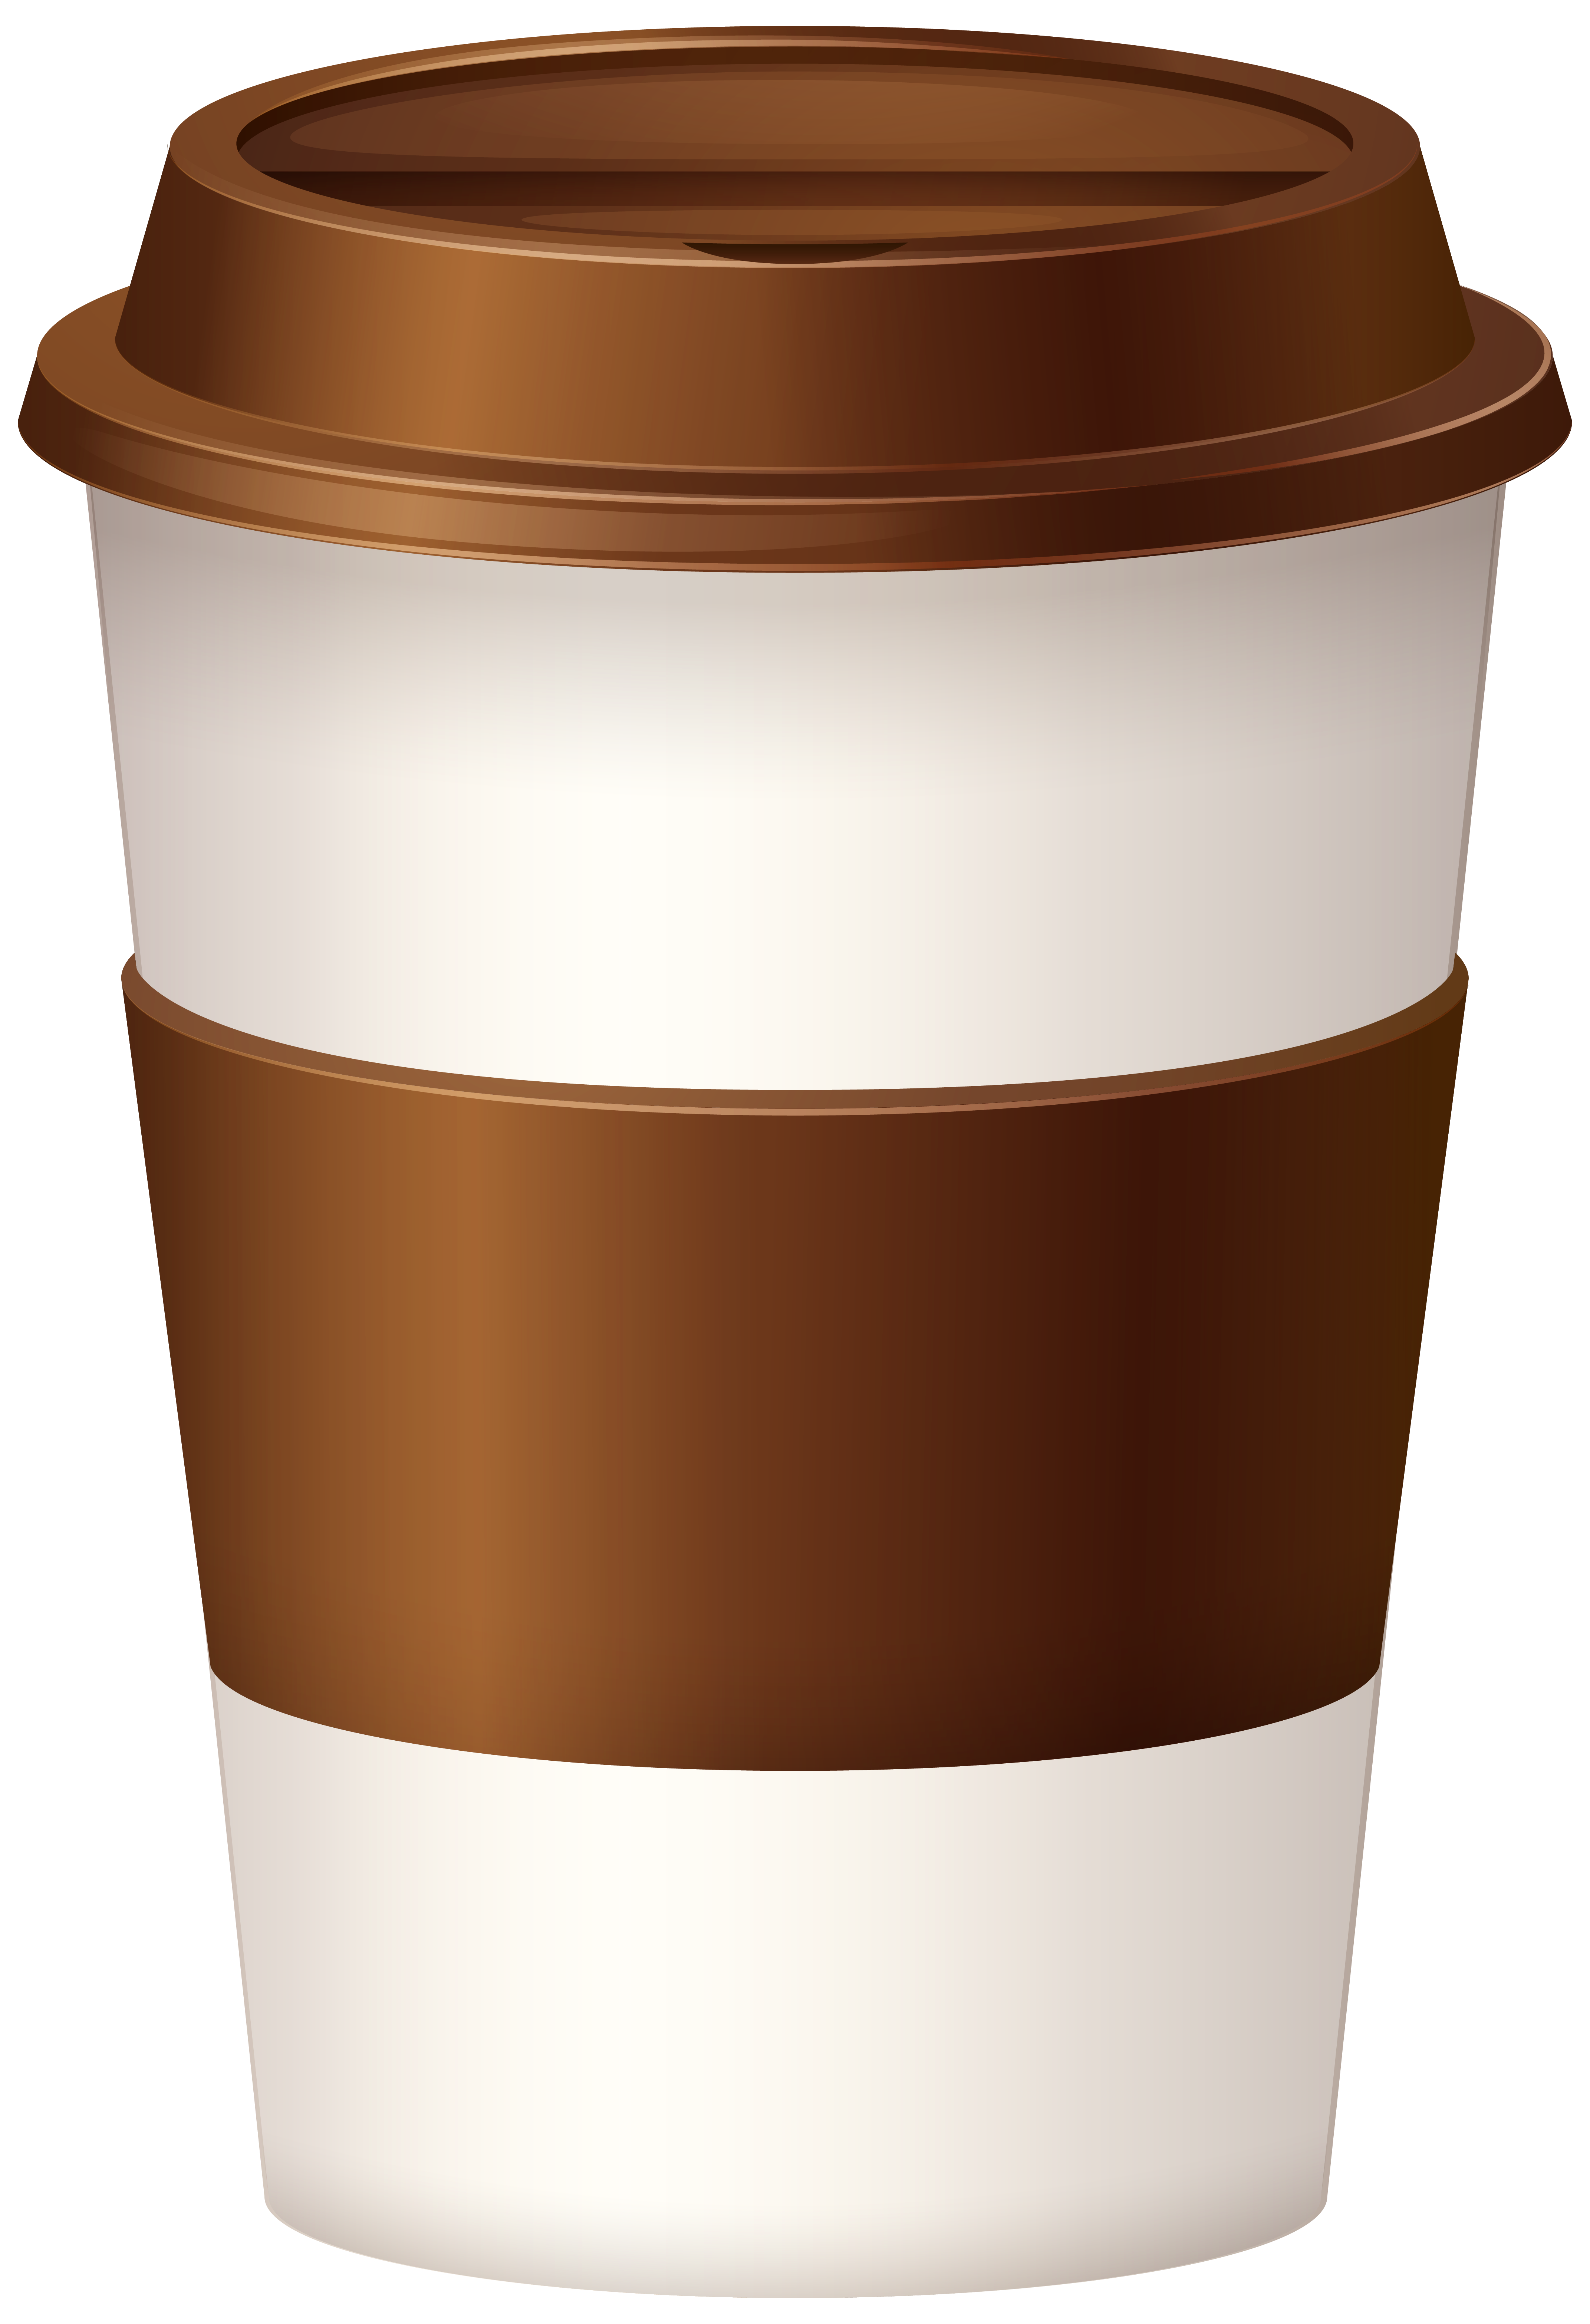 Take Away Coffee Cup And Travel Mug Stock Illustration - Download ...